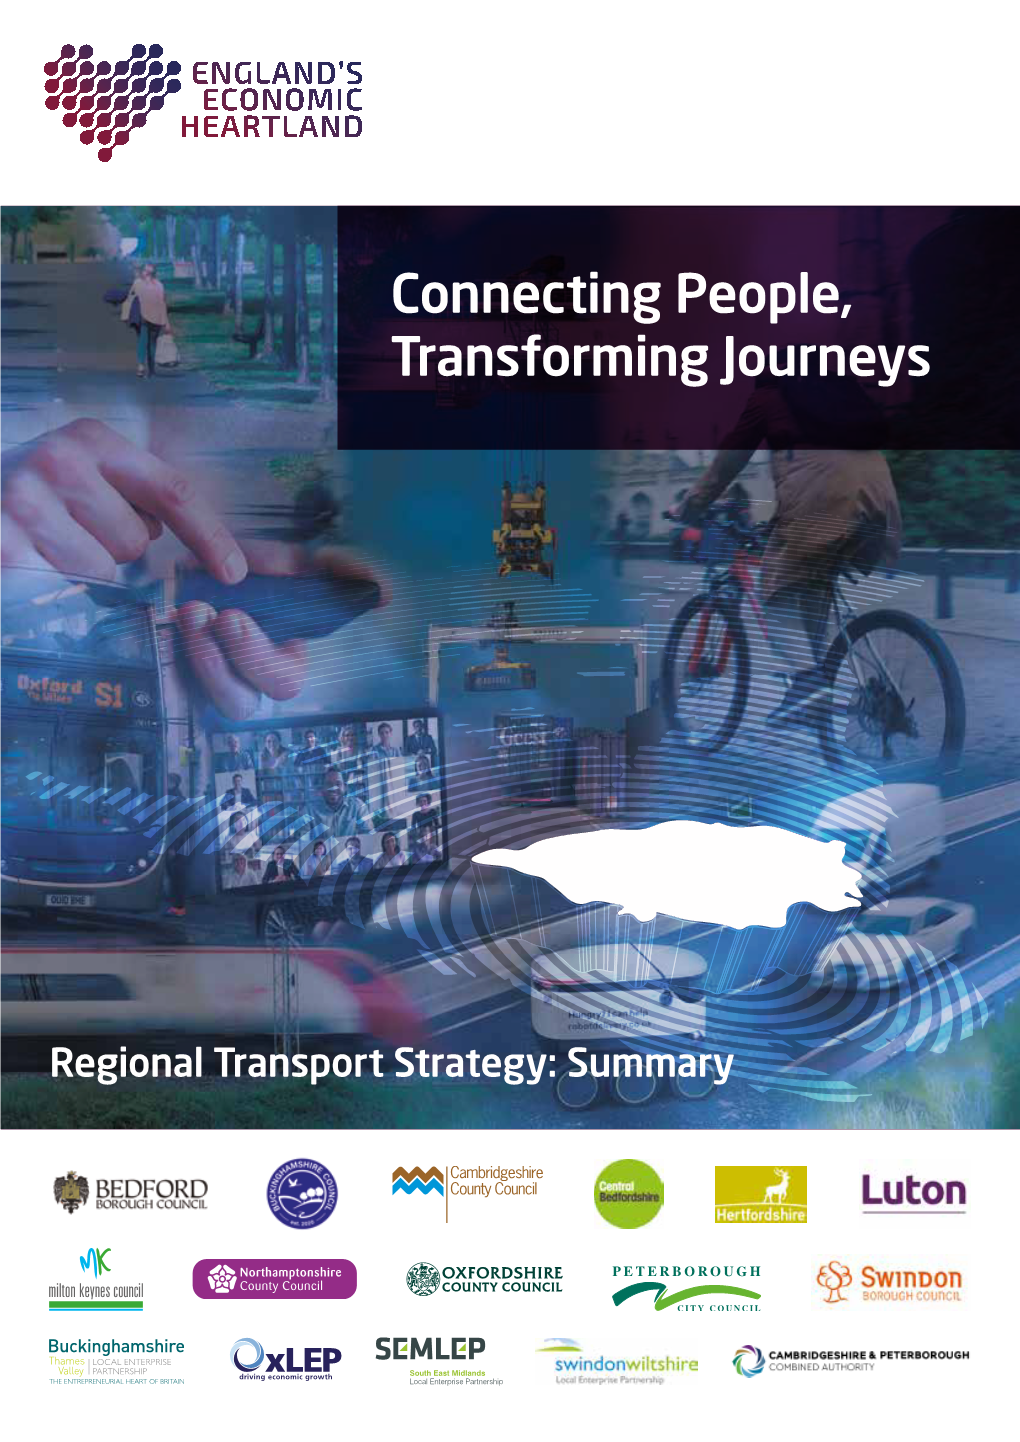 Regional Transport Strategy: Summary